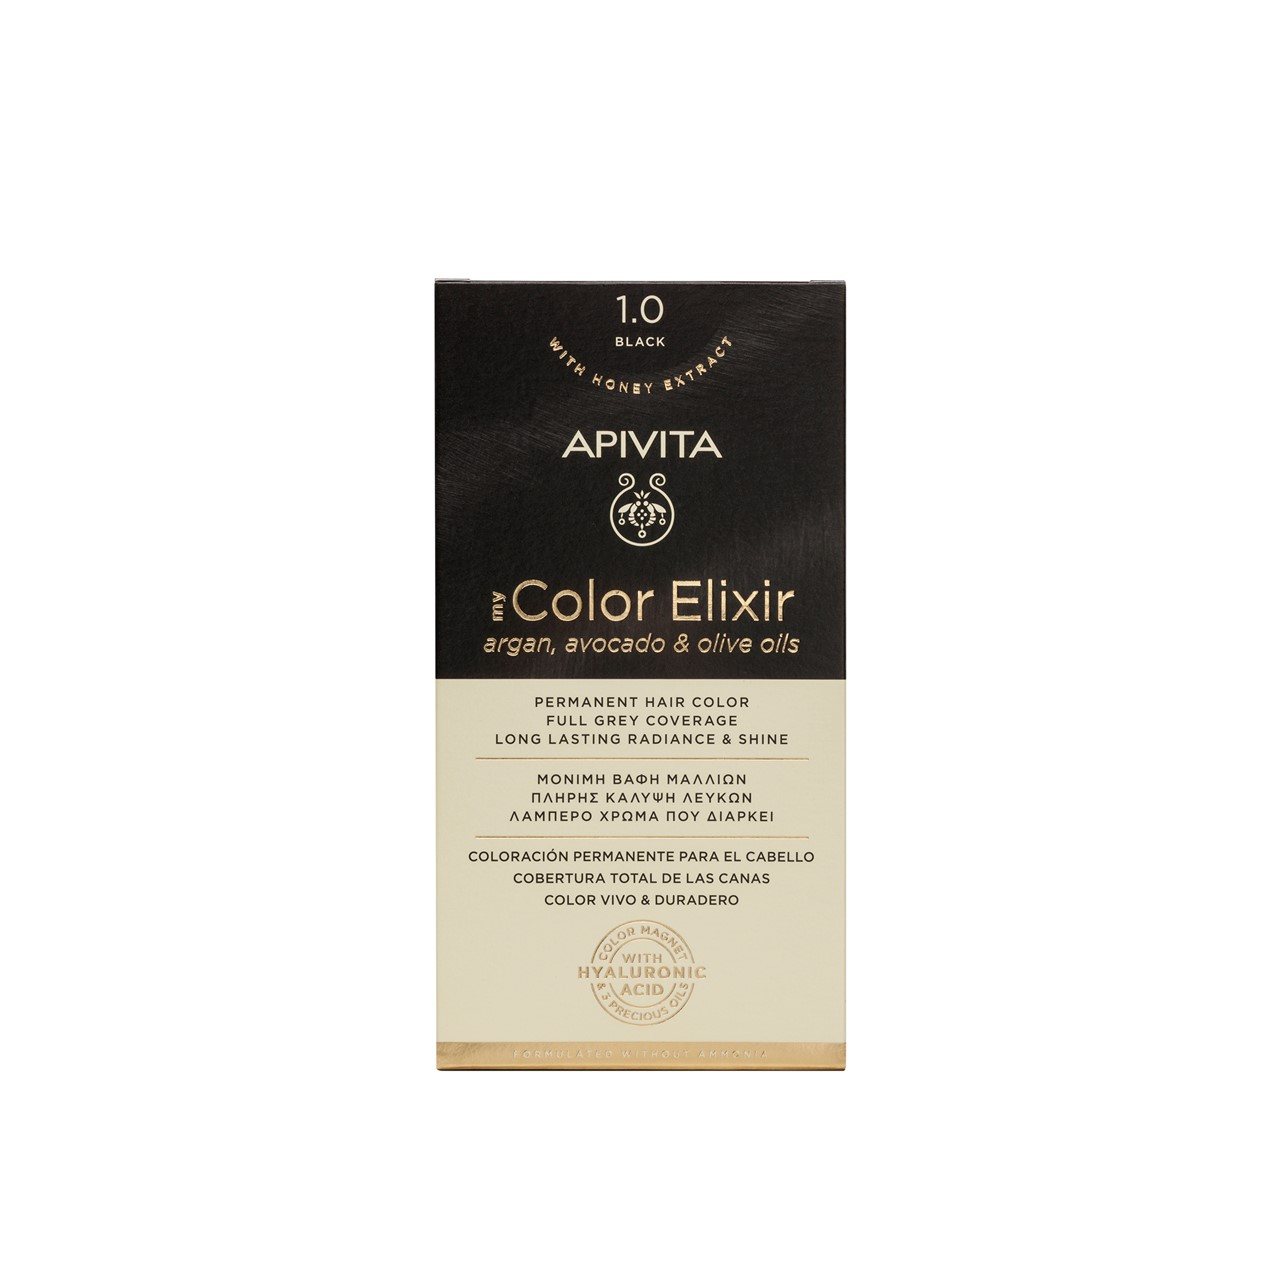 APIVITA My Color Elixir 1.0 Permanent Hair Color